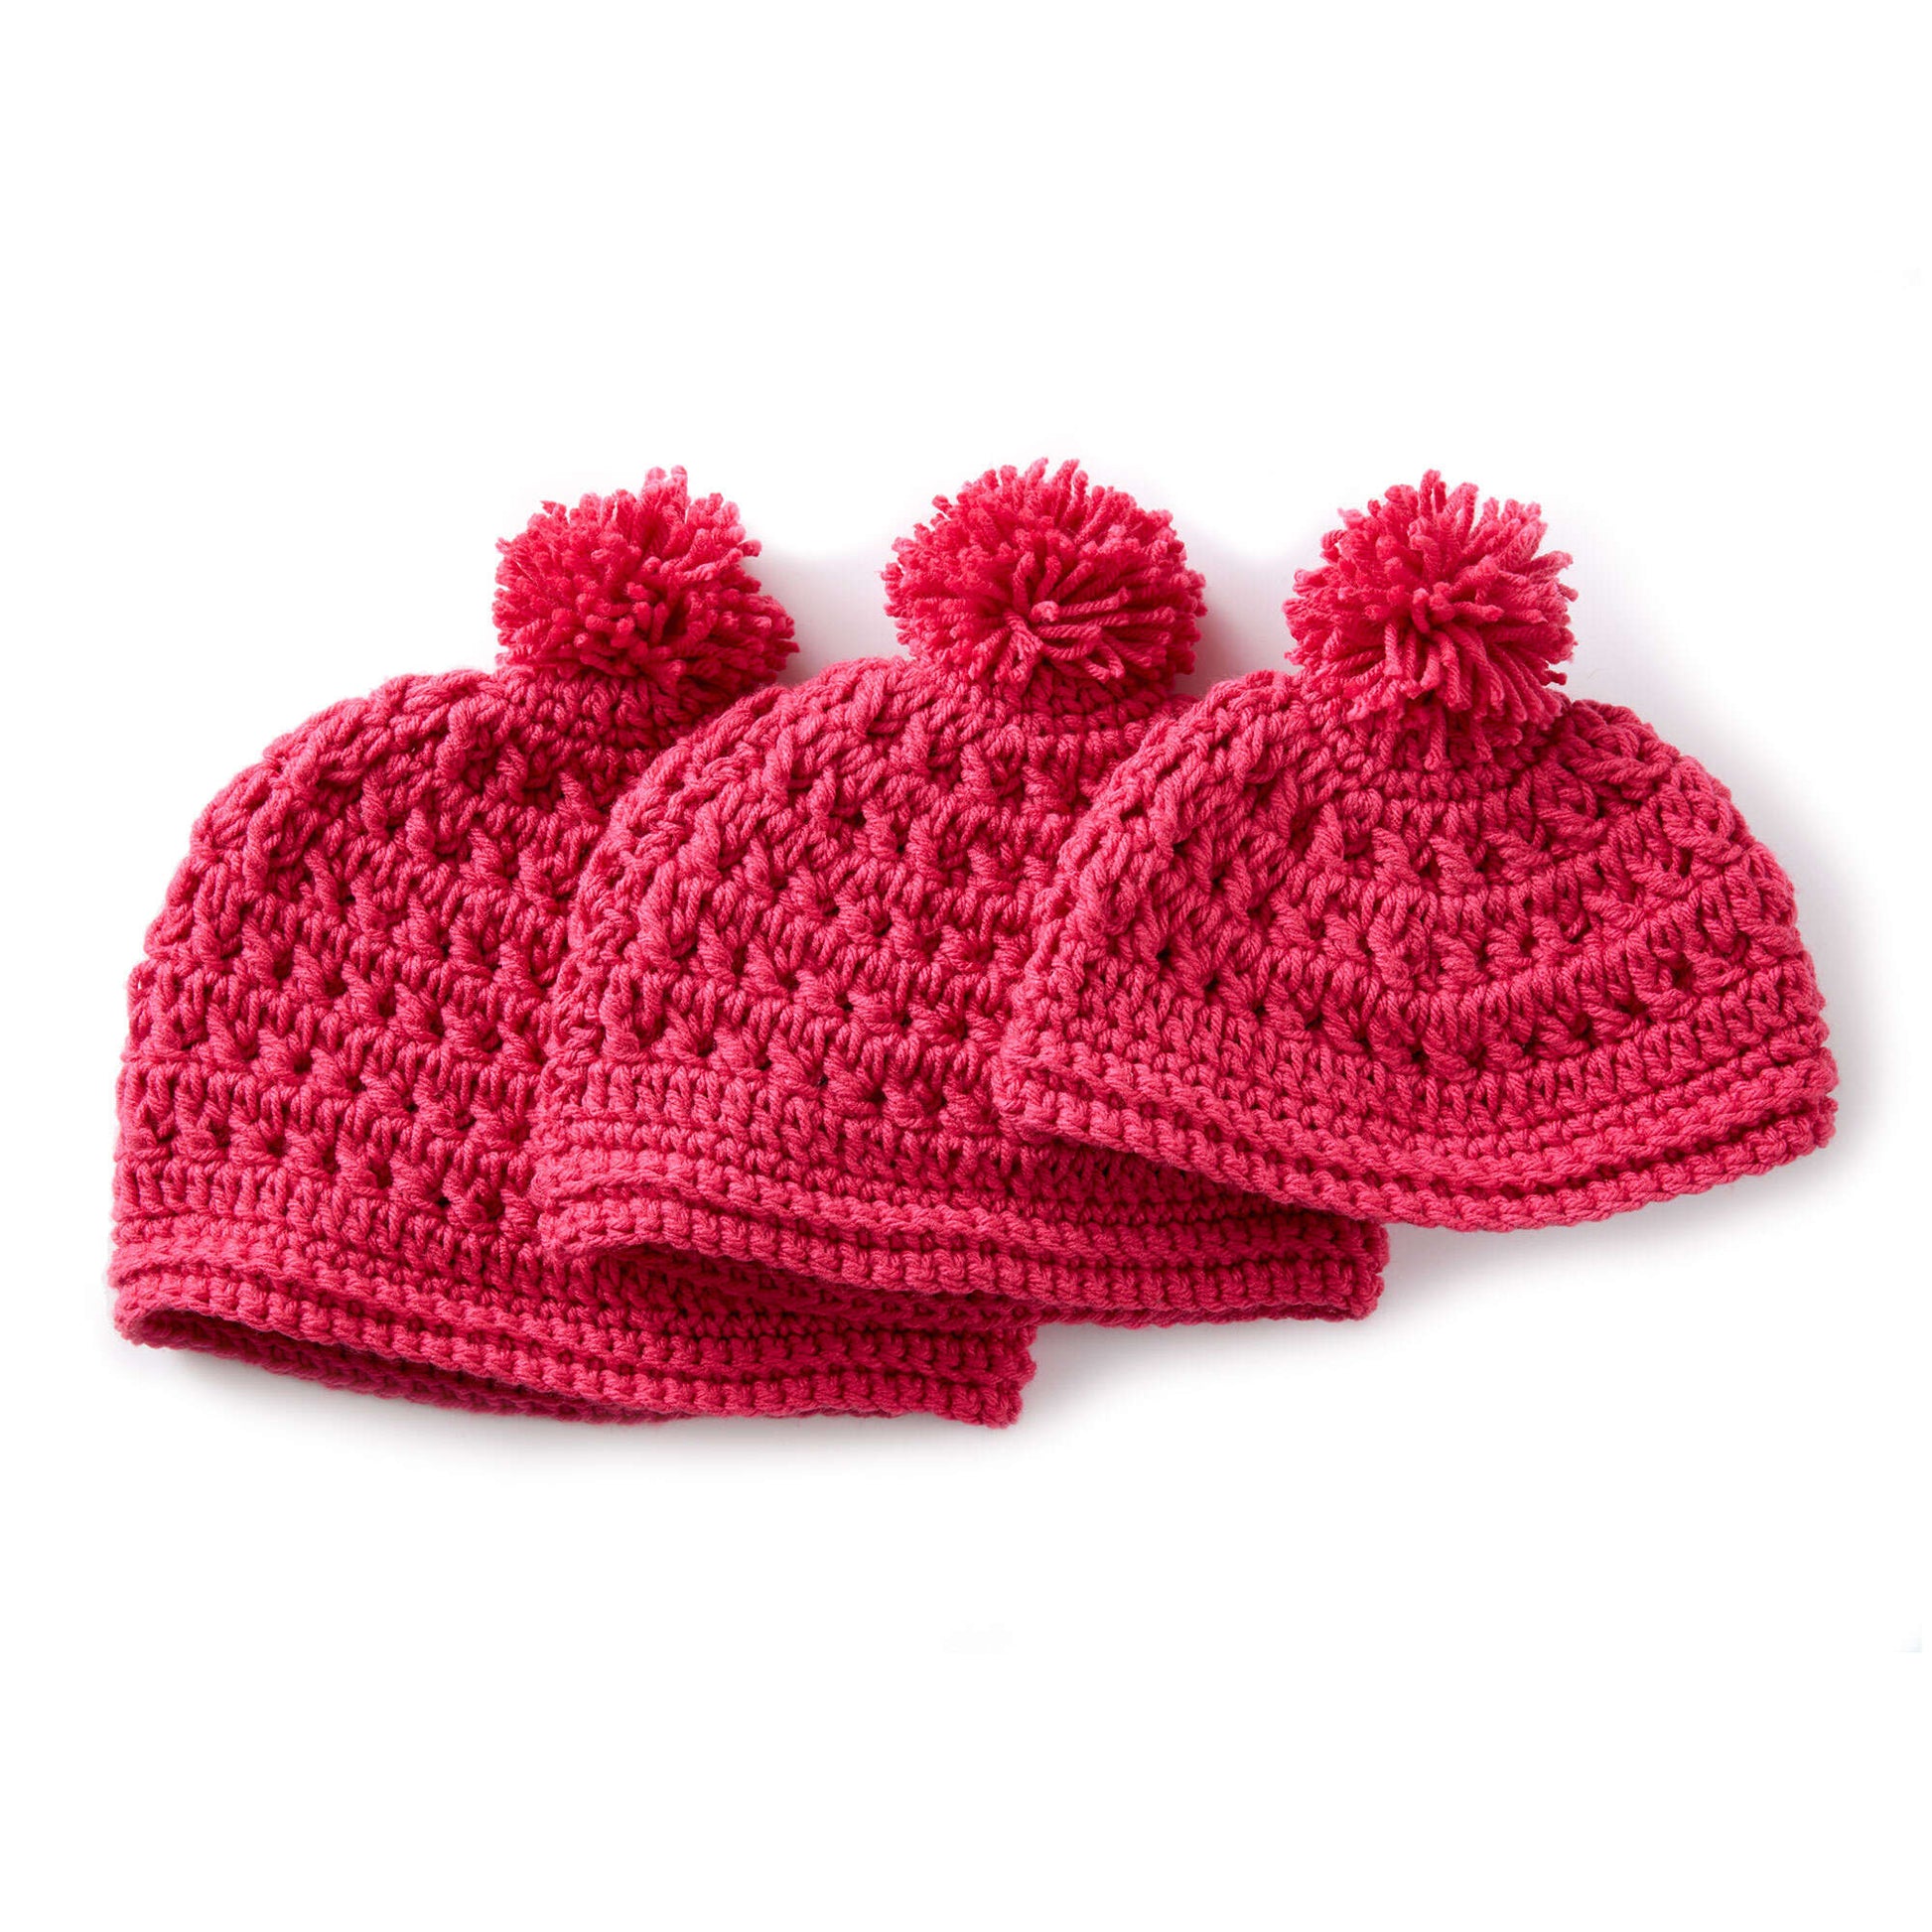 Free Caron Pebbled Texture Crochet Hat Pattern